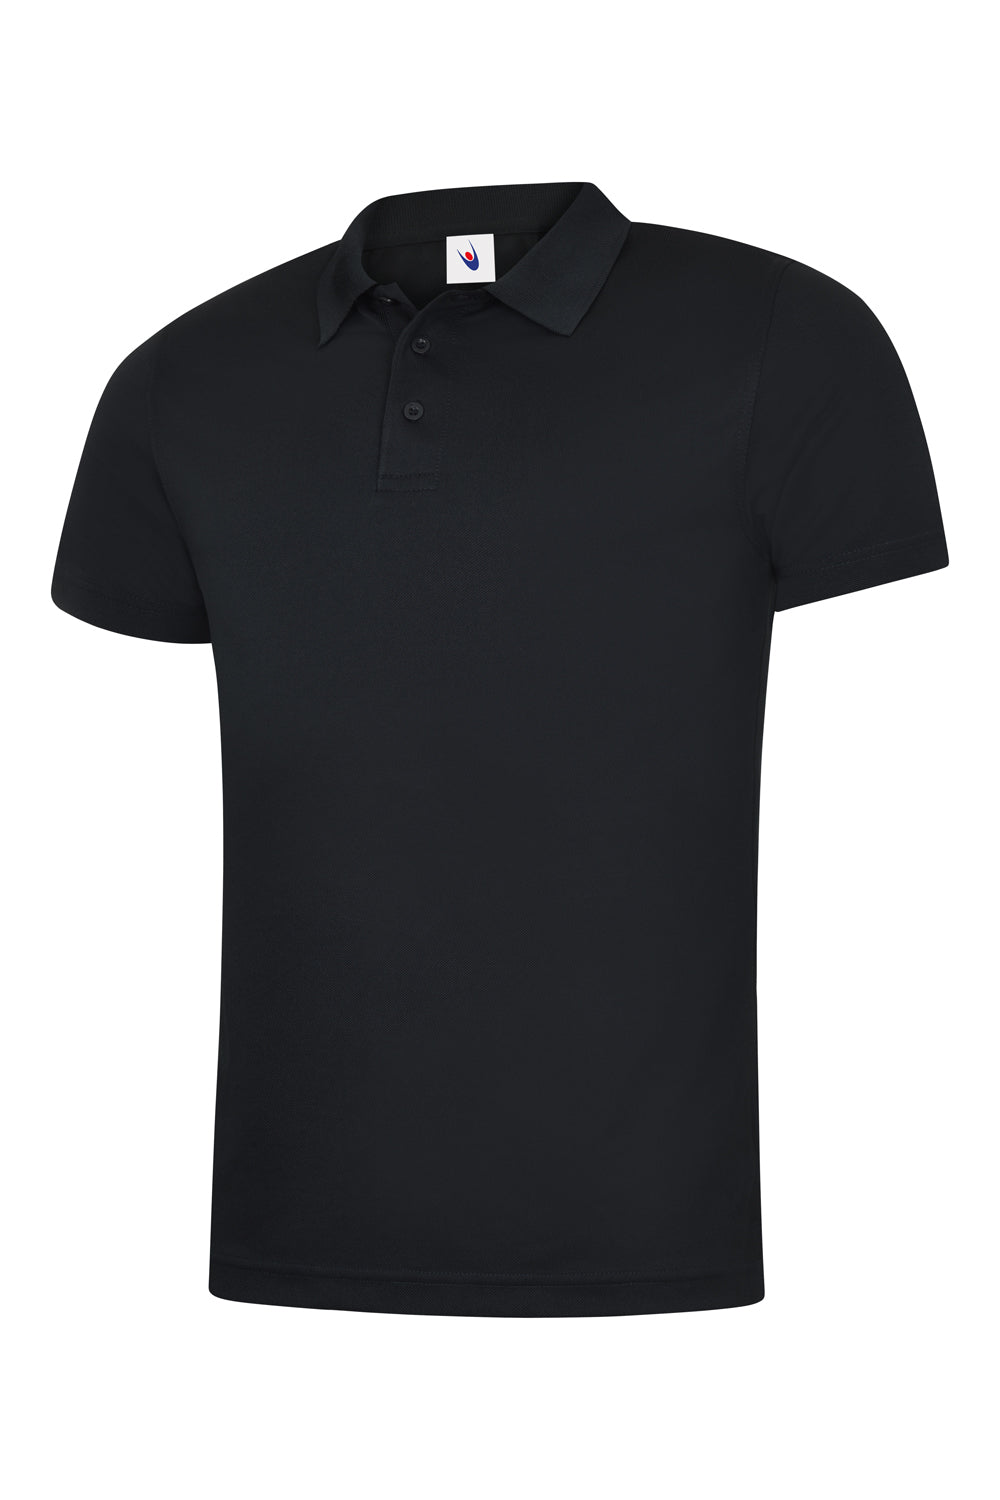 Uneek Mens Super Cool Workwear Poloshirt UC127 - Black